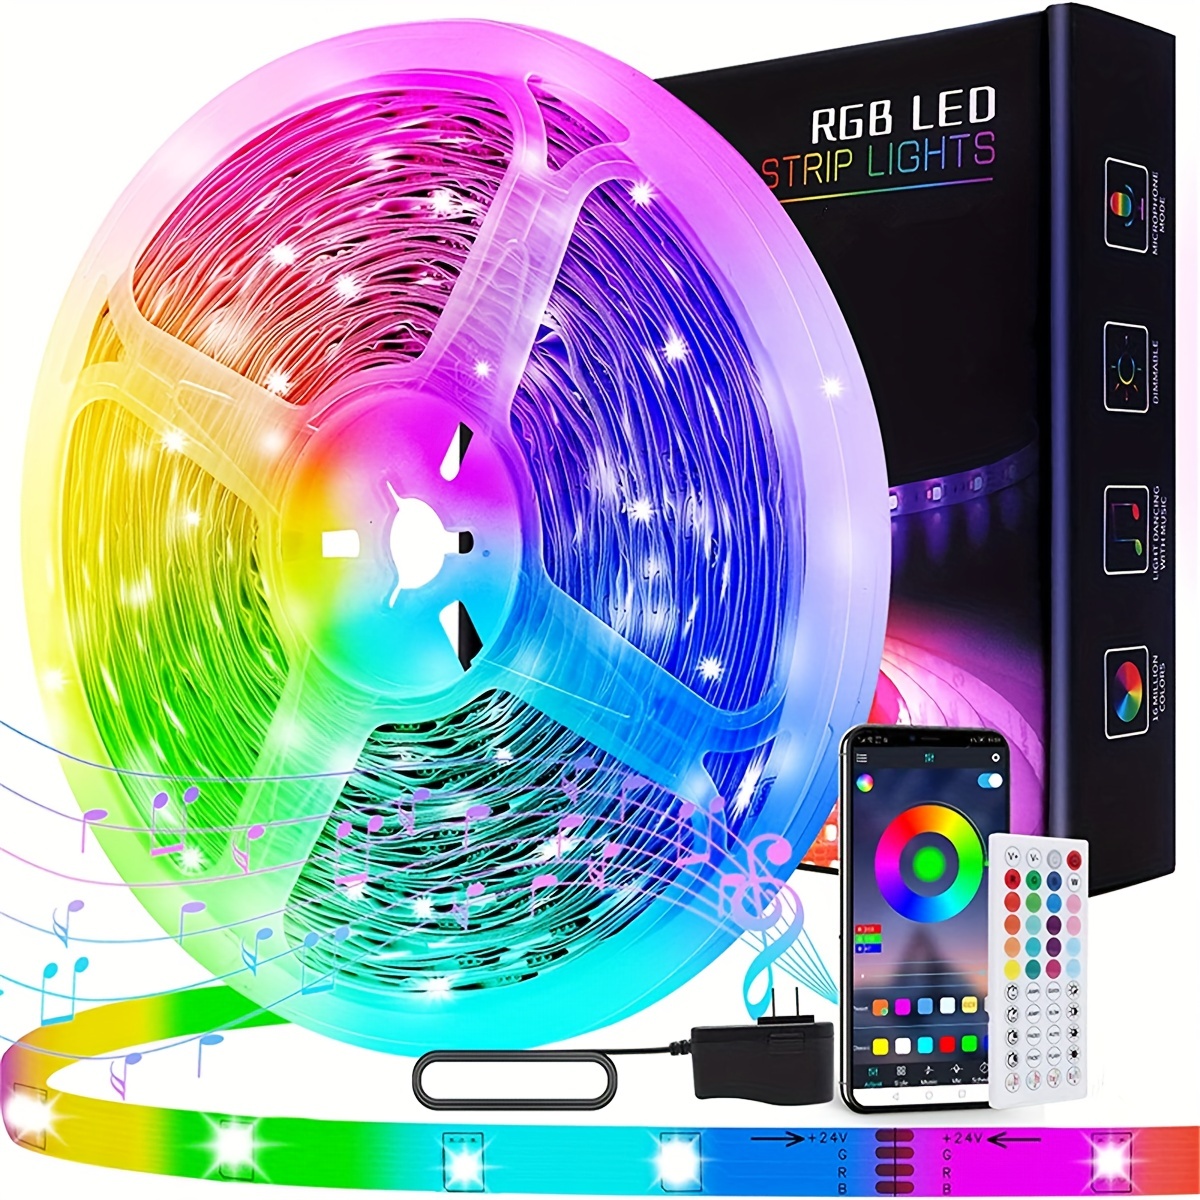 Led Lights for Bedroom 100 ft (2 Rolls of 50ft) Music Sync Color Changing  RGB Led Strip Lights with Remote App Control Bluetooth Led Strip, Led  Lights